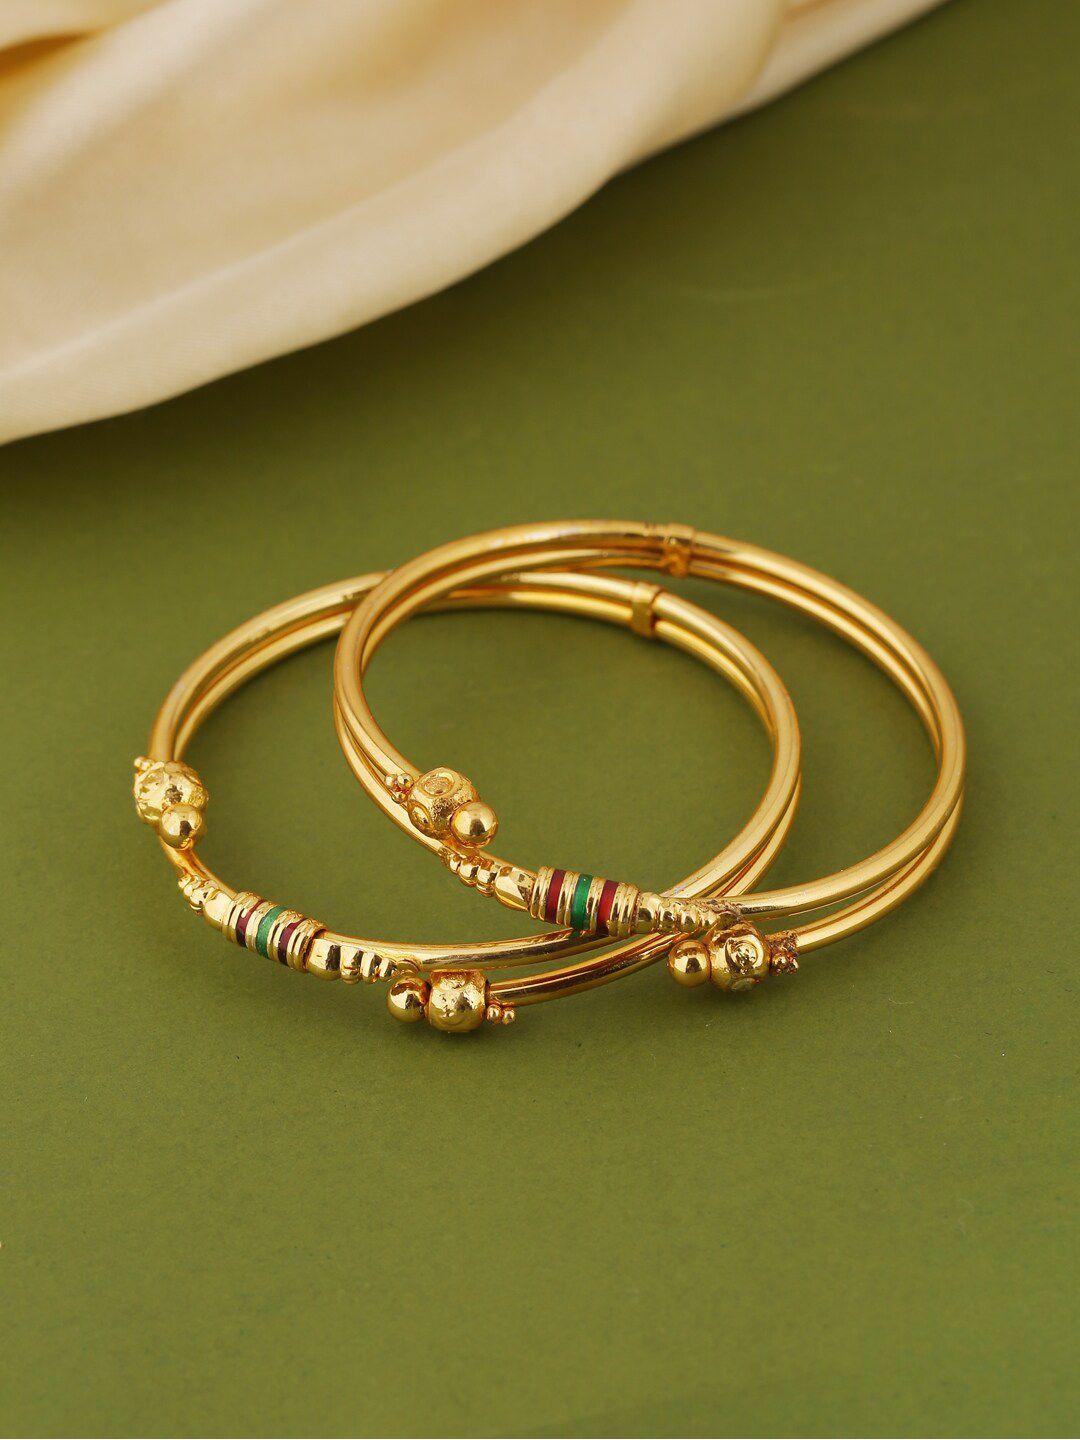 shoshaa set of 2 gold-plated bangles